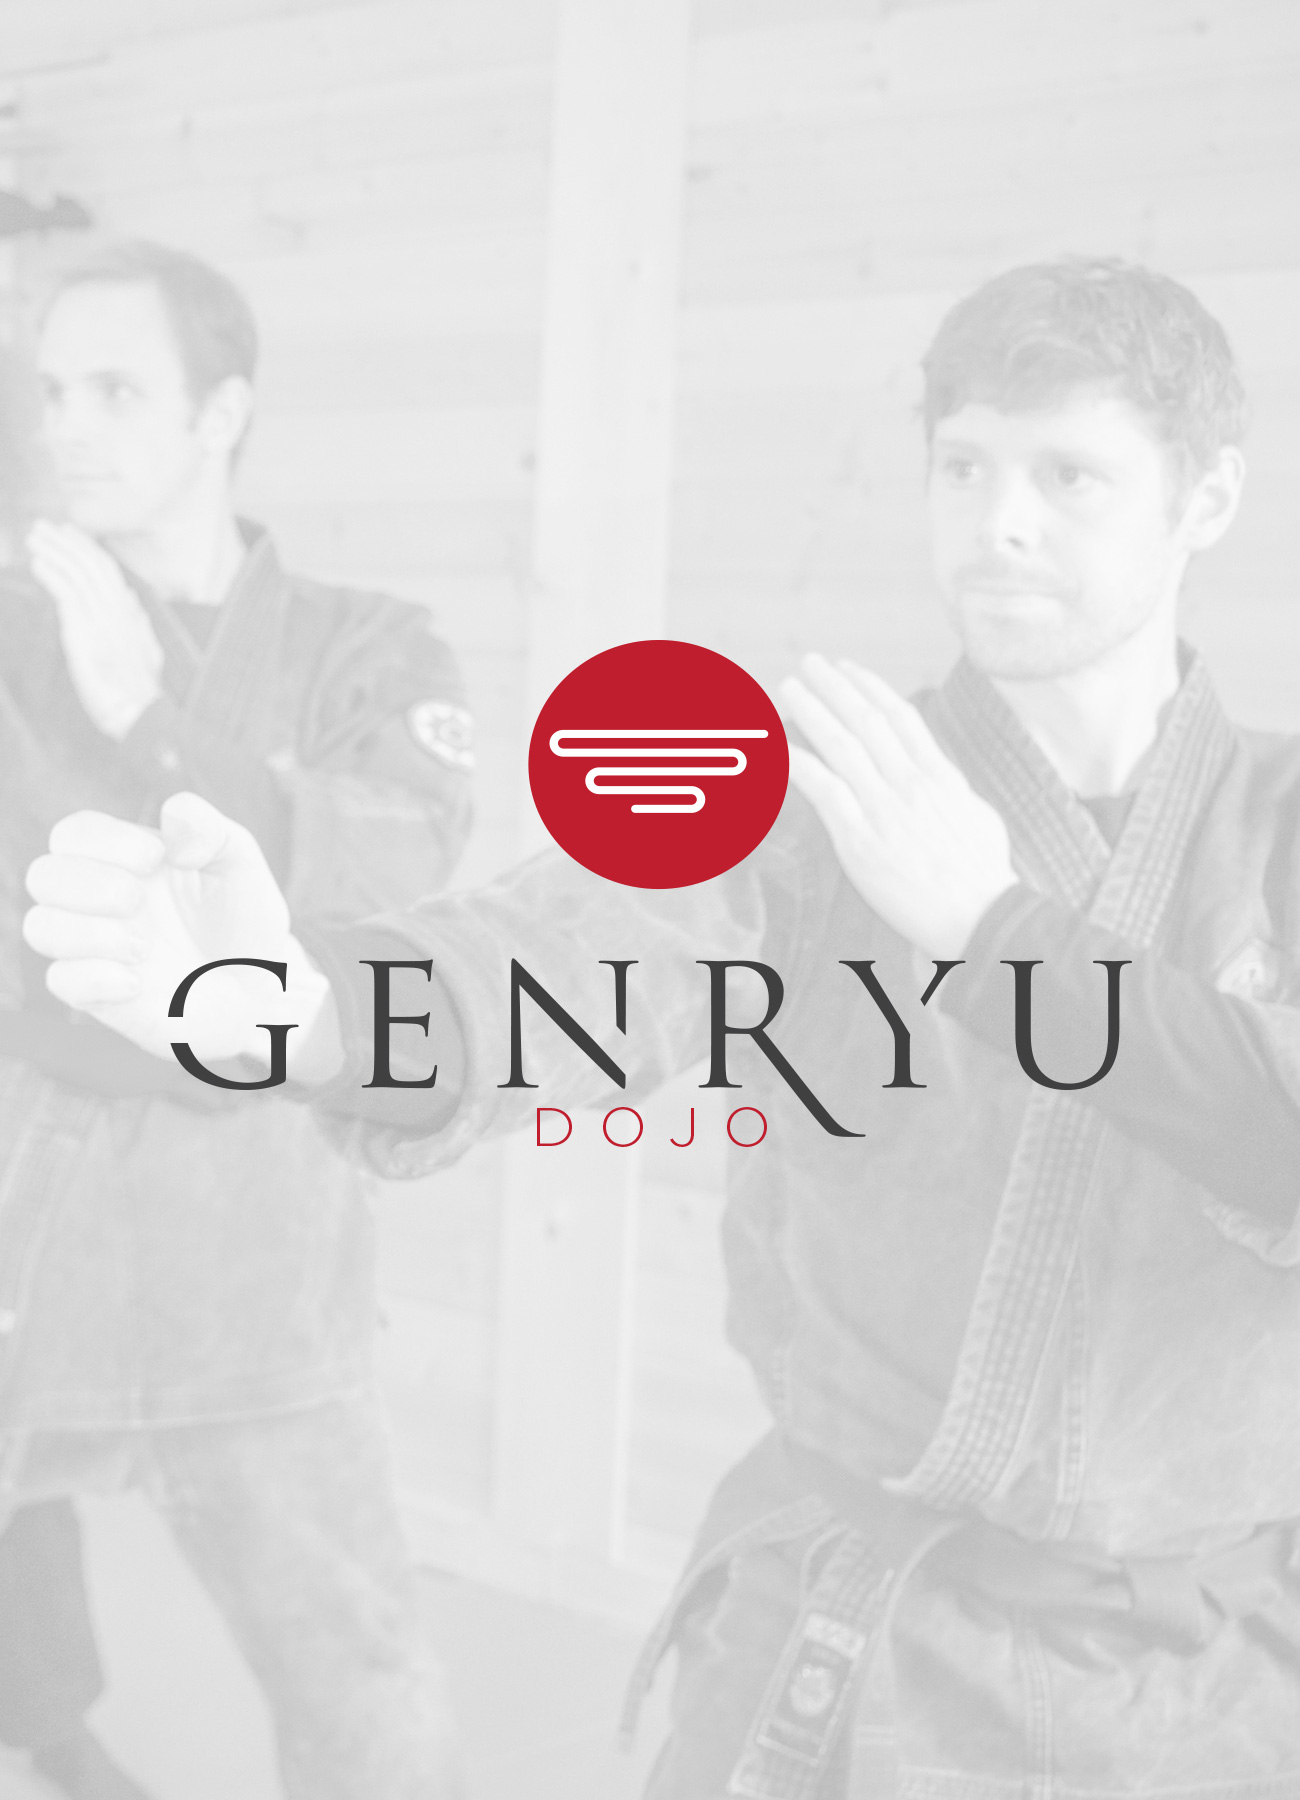 Genryu Dojo Website Design | Nicole Victory Design